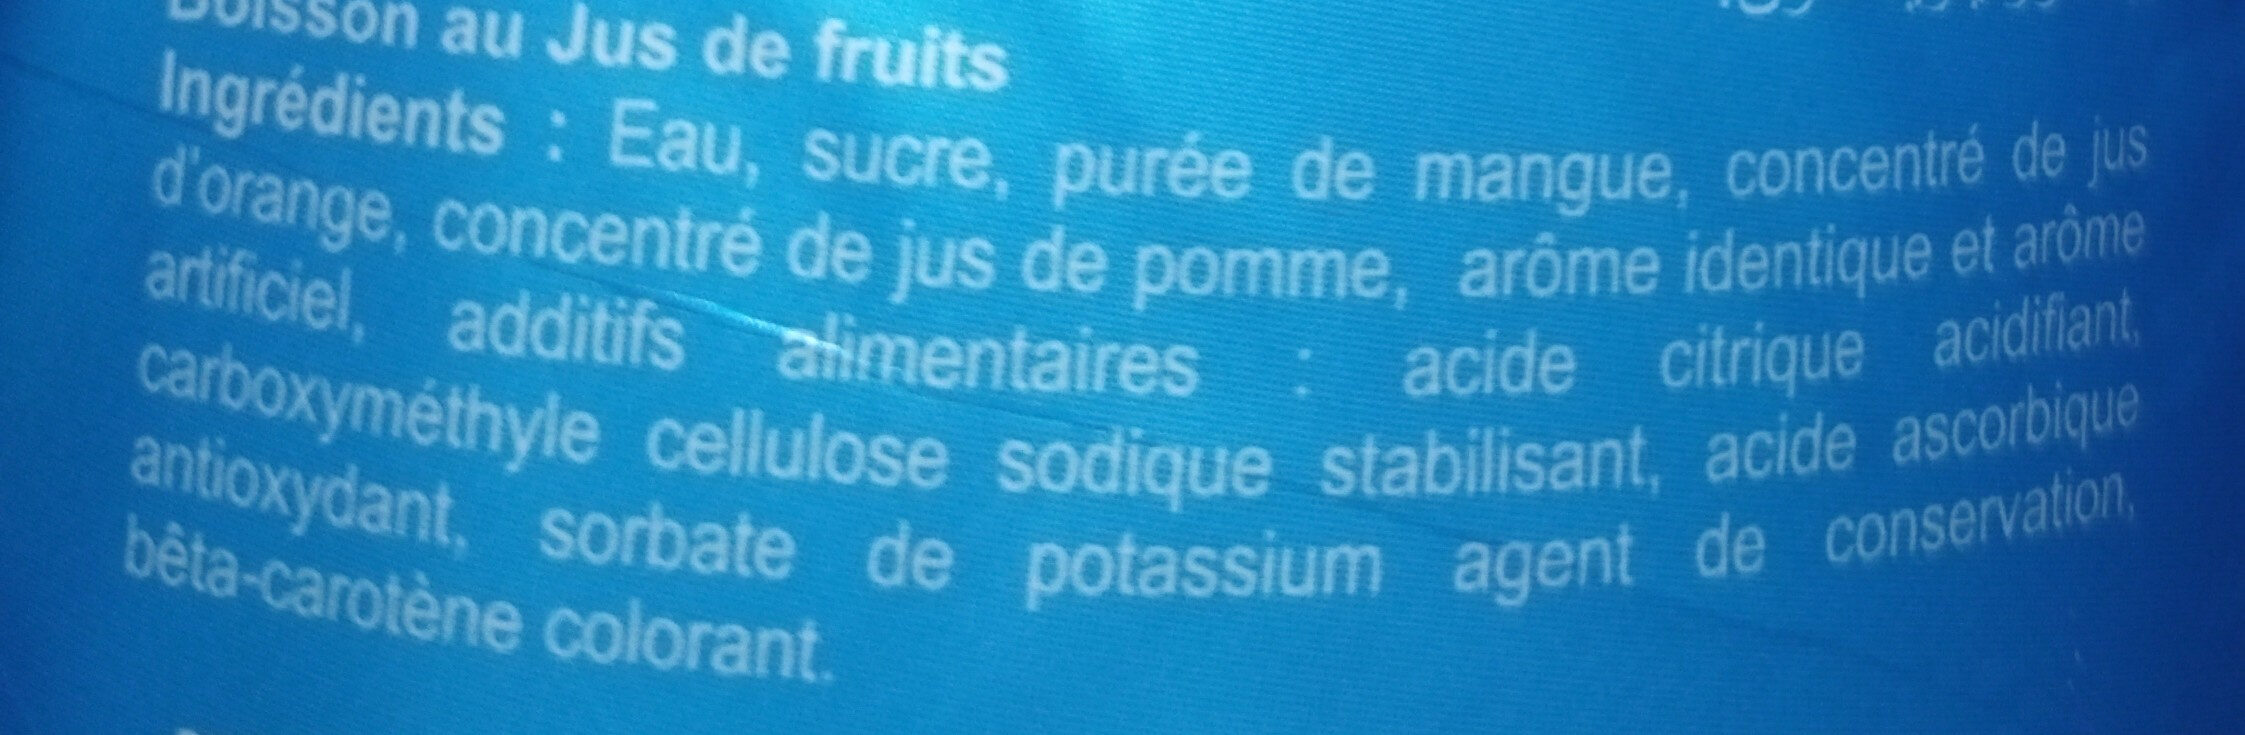 Amazon jus Orange-Mangue - Ingredients - fr